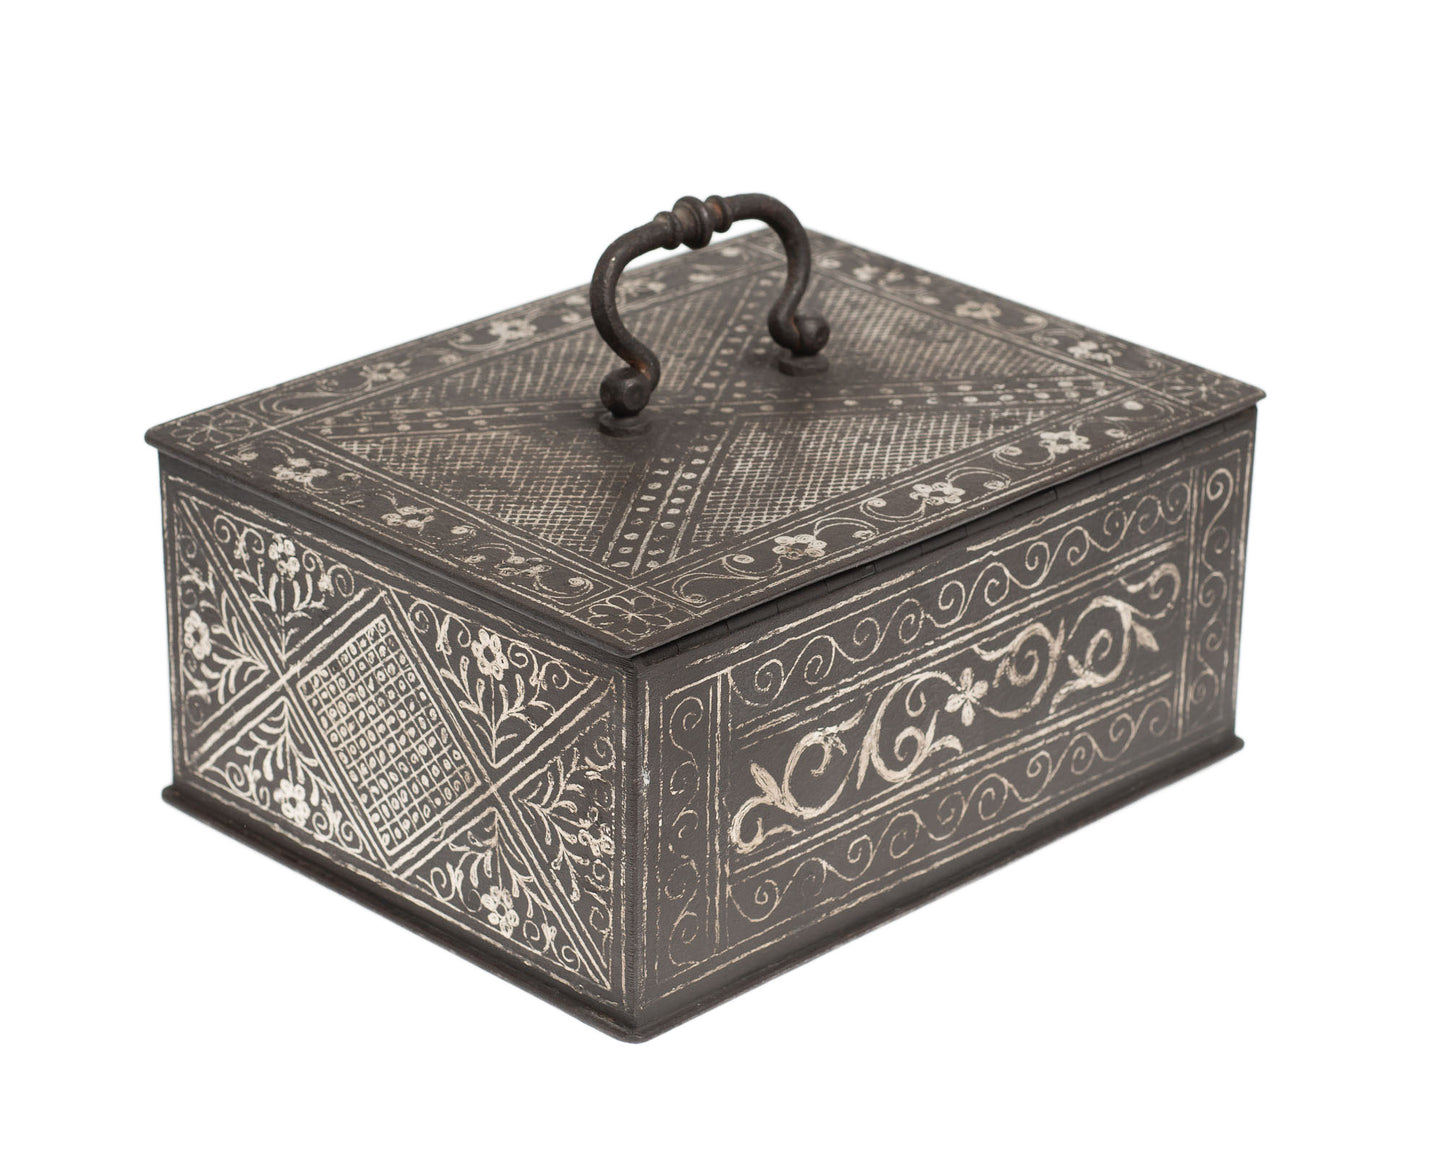 Antique Indonesian Black Iron & Silver Koftgari Strong Box Java/Madura with Olanda Design (3021)